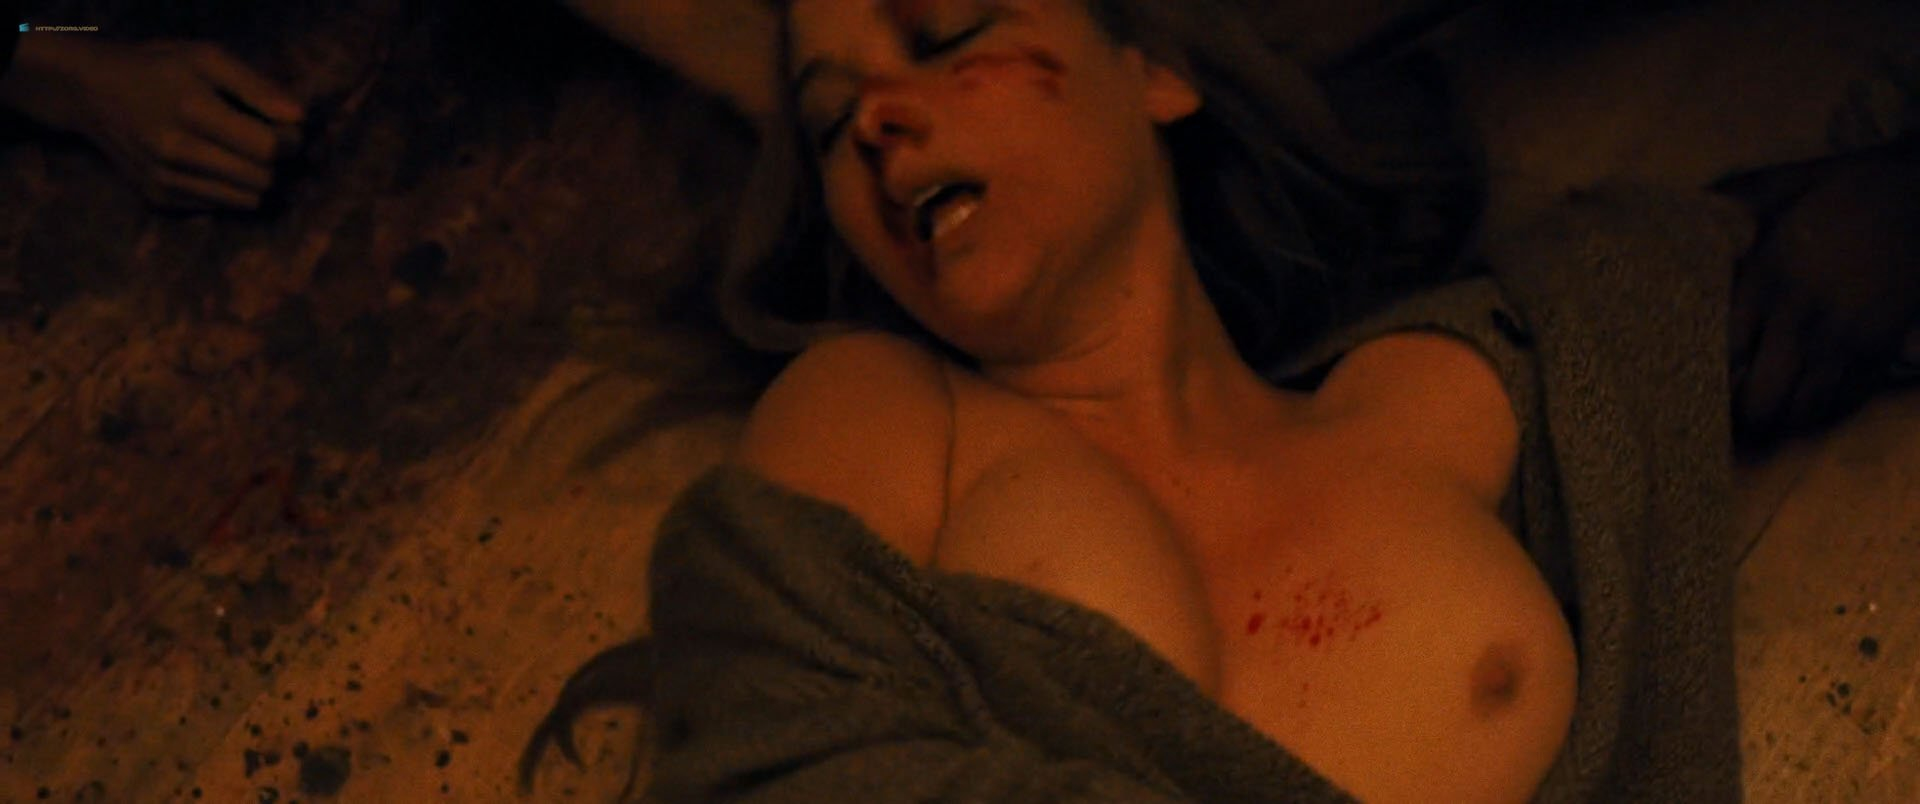 Jennifer lawrence nude scenes in movies